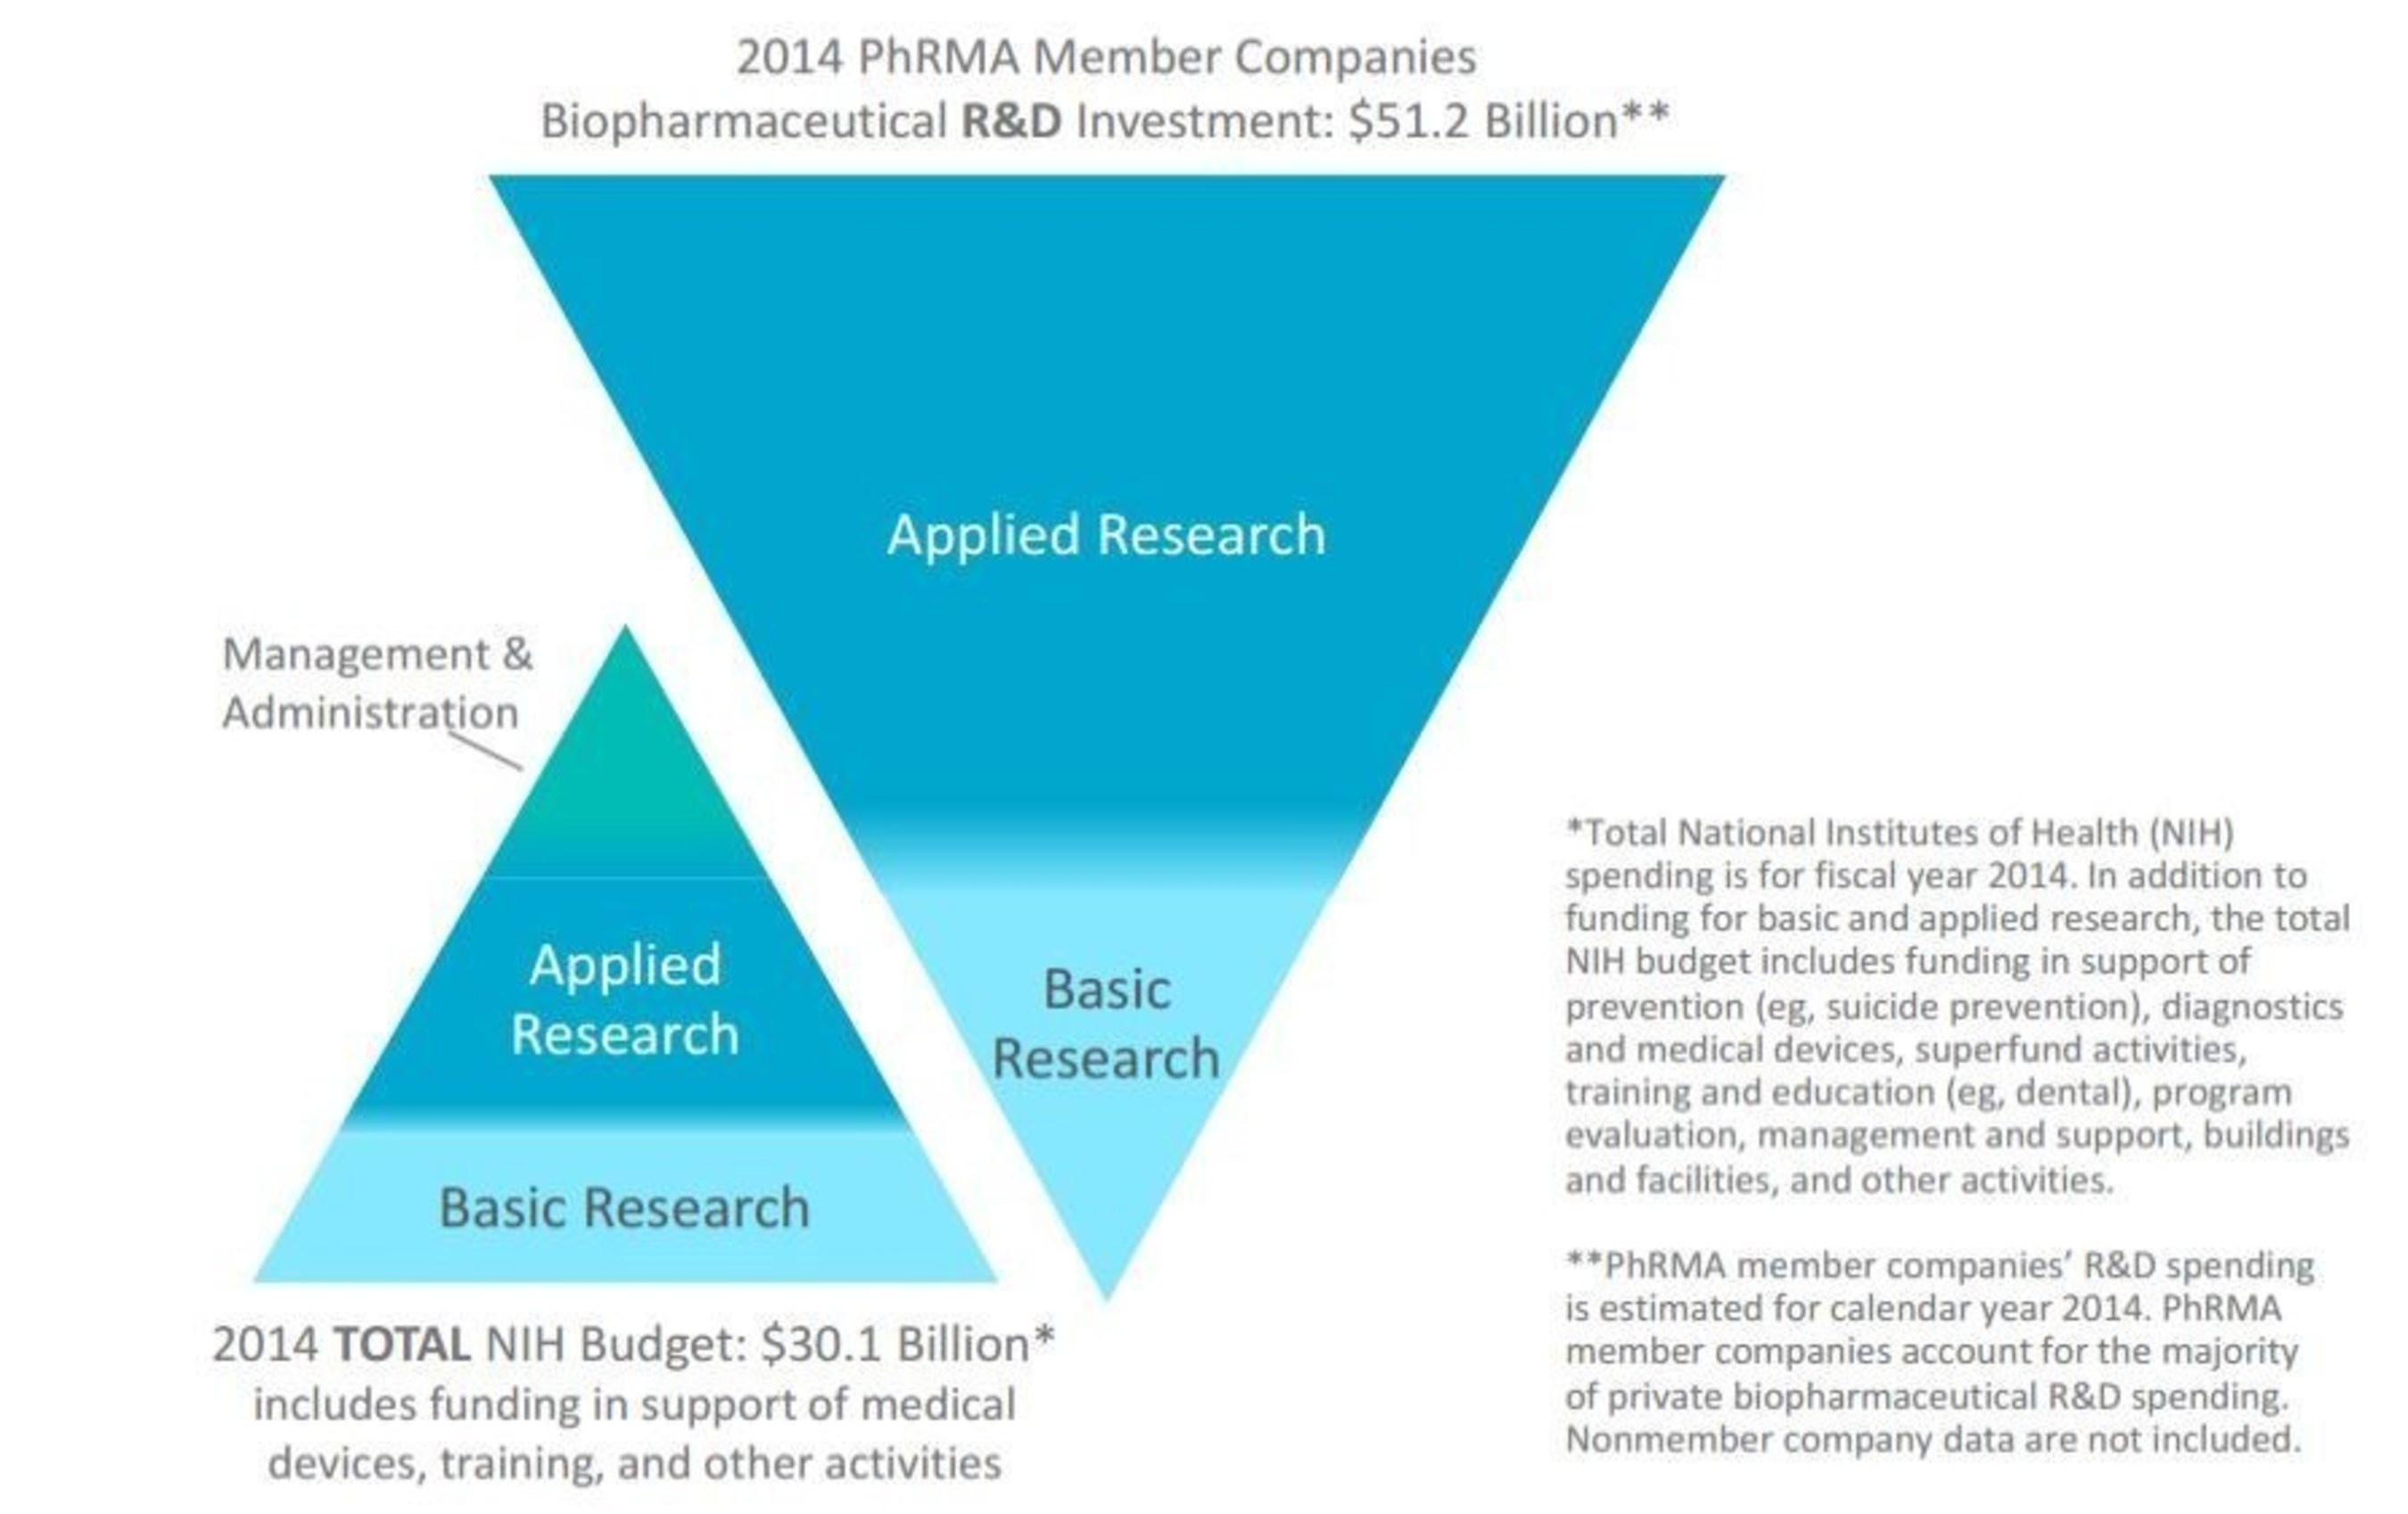 2014 PhRMA Member Companies Biopharmaceutical R&D Investment: $51.2 Billion.